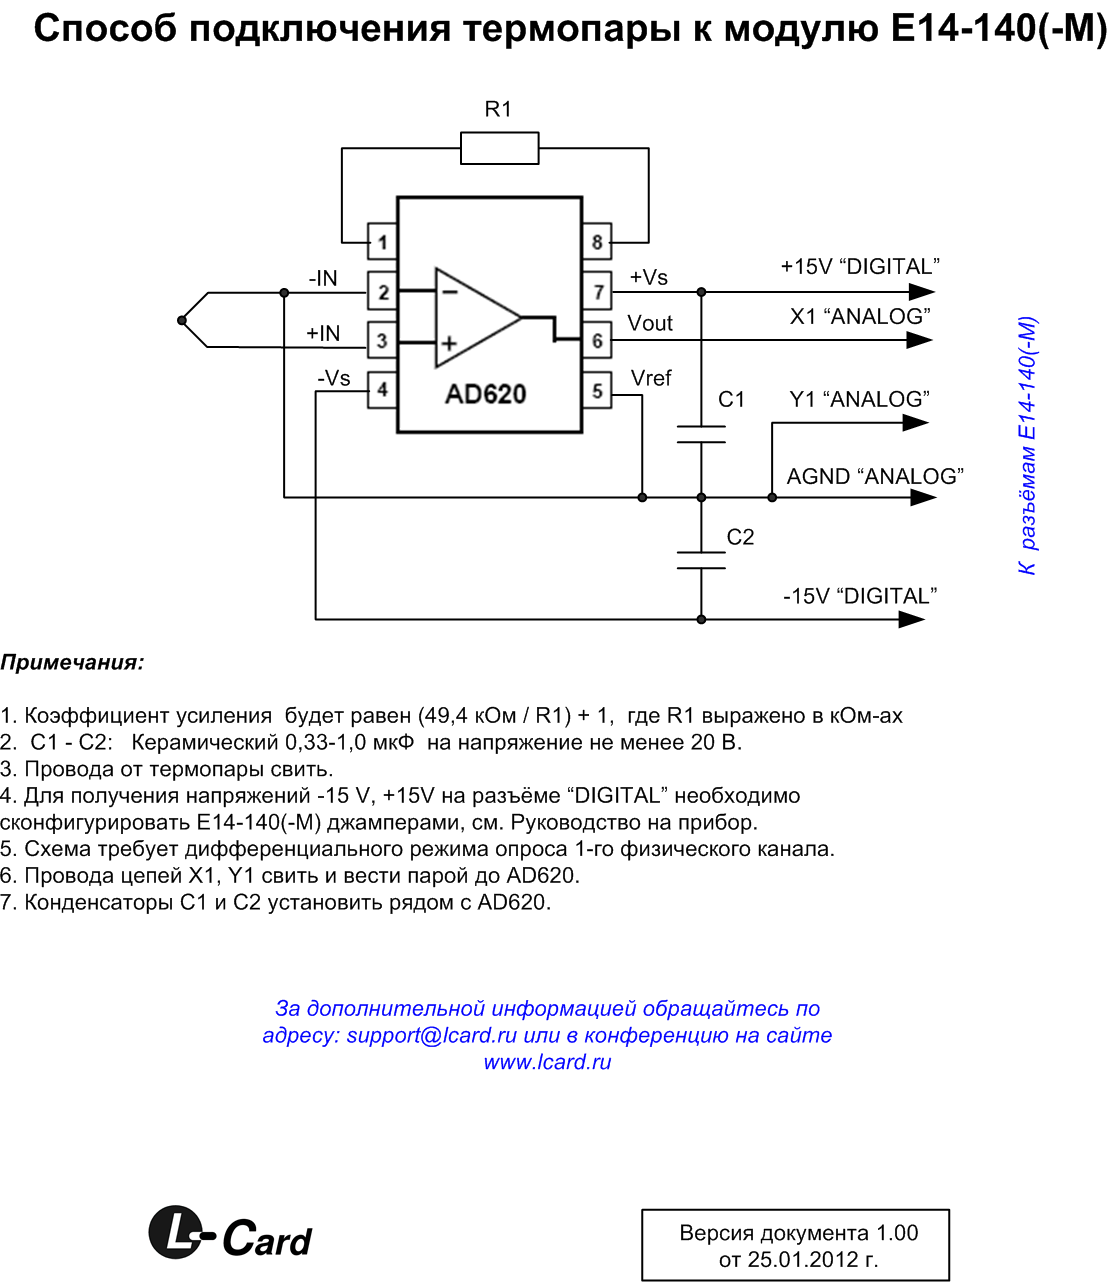 Подключение термопары к модулю E14-140(M)